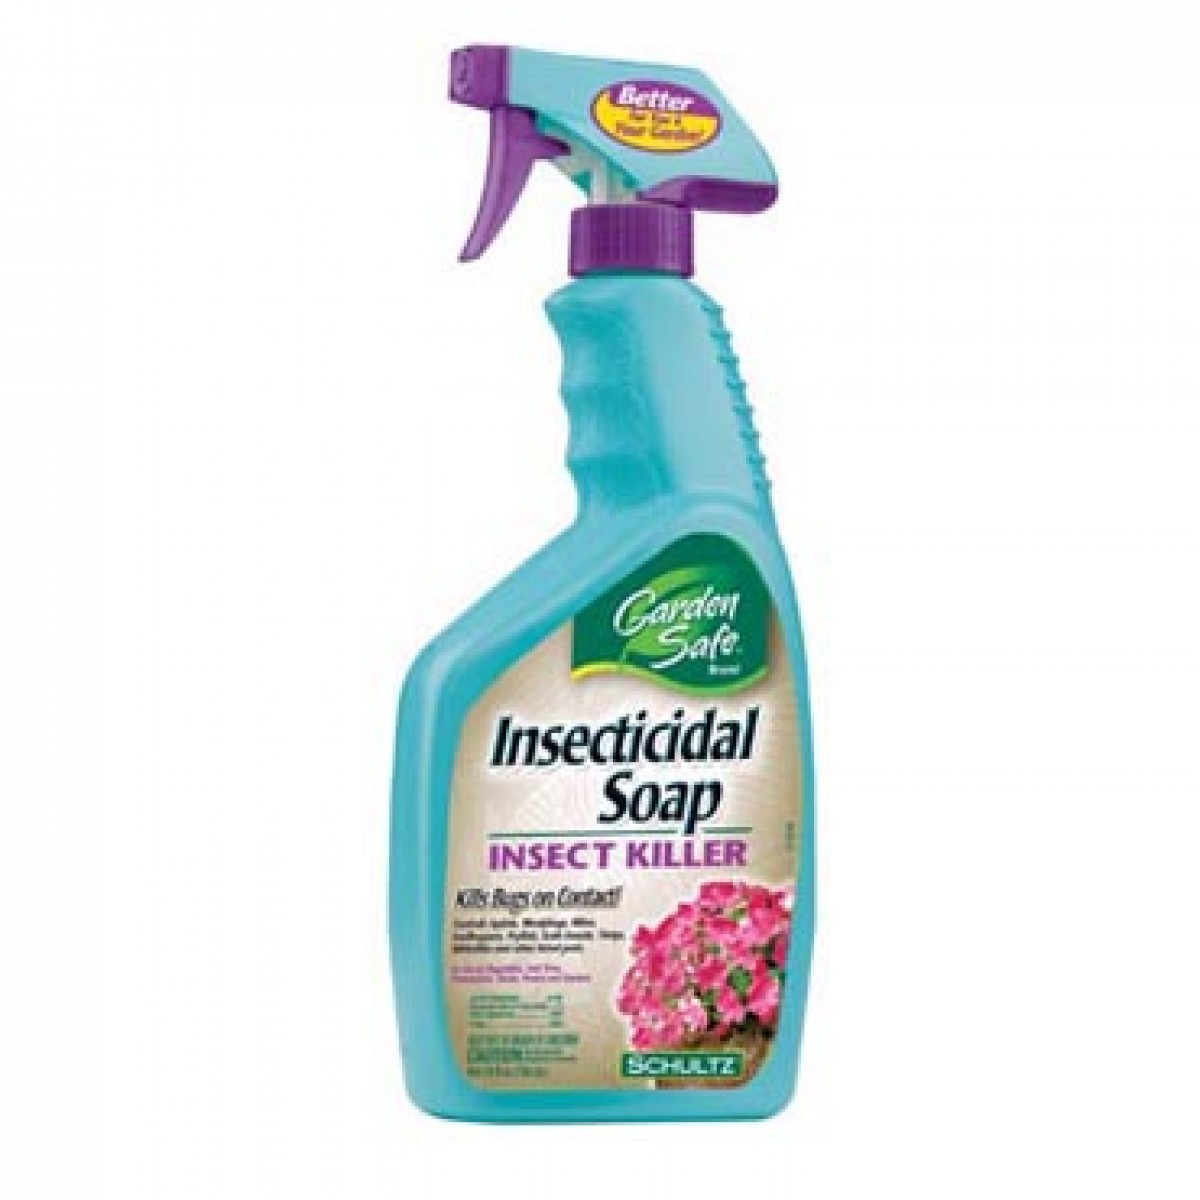 Garden Safe Insecticidal Soap Flower Delivery Nyc Plantshed Com